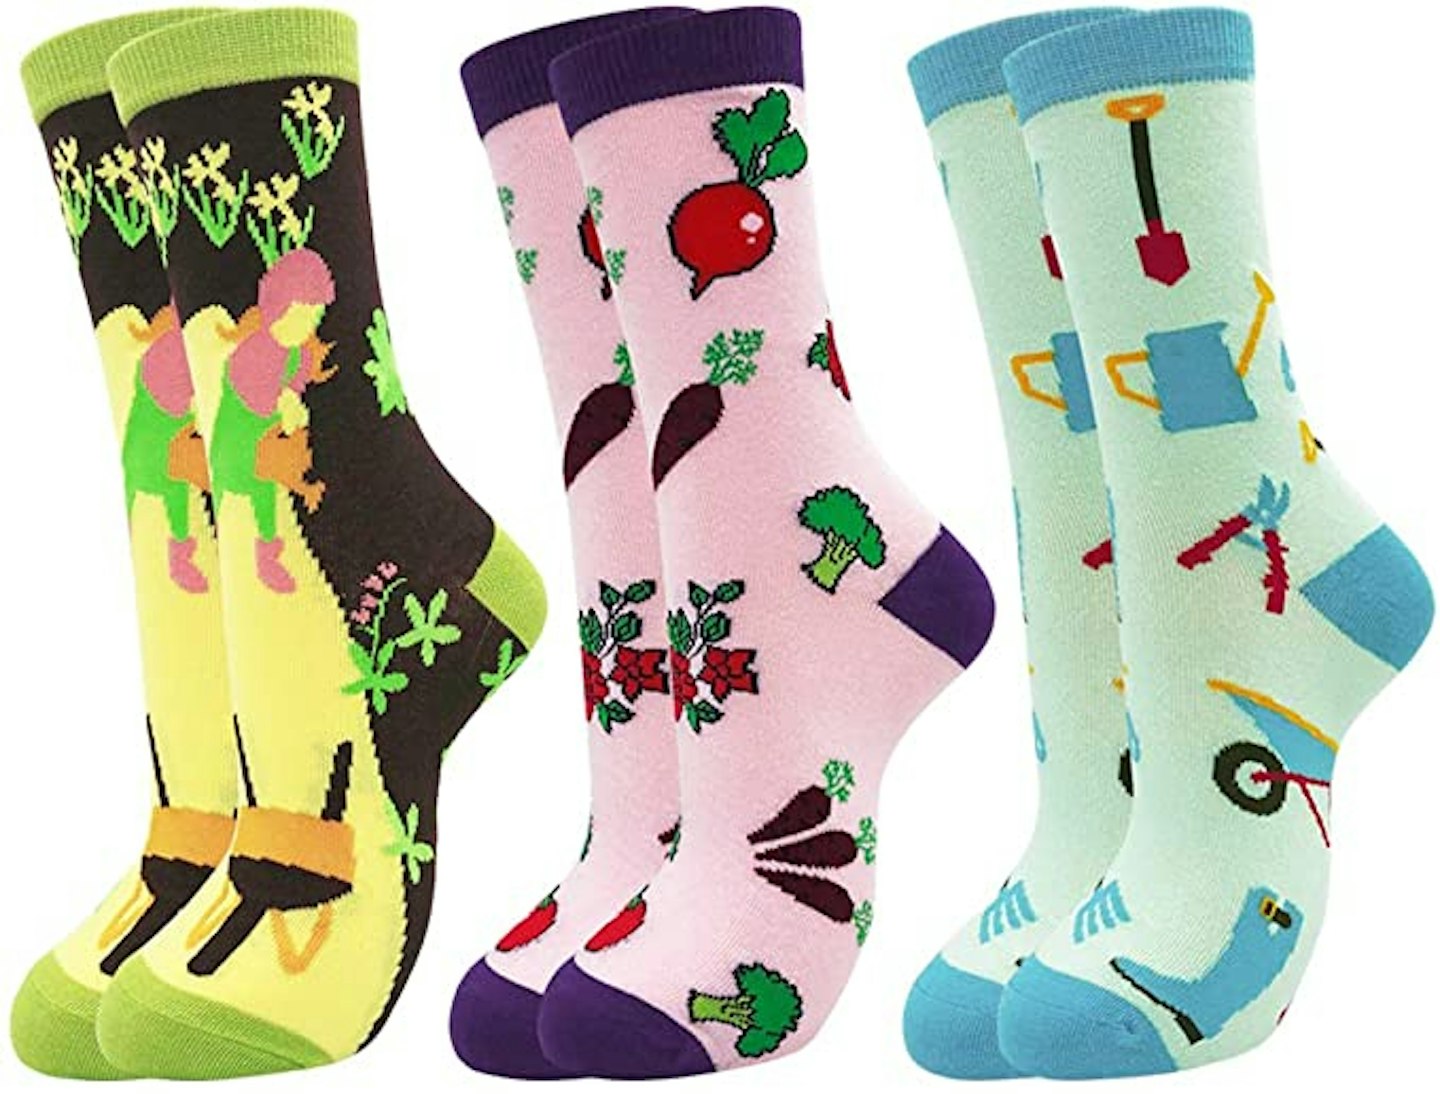 Belloxis Funny Socks Women Novelty Funky Fun Socks Gifts for Women